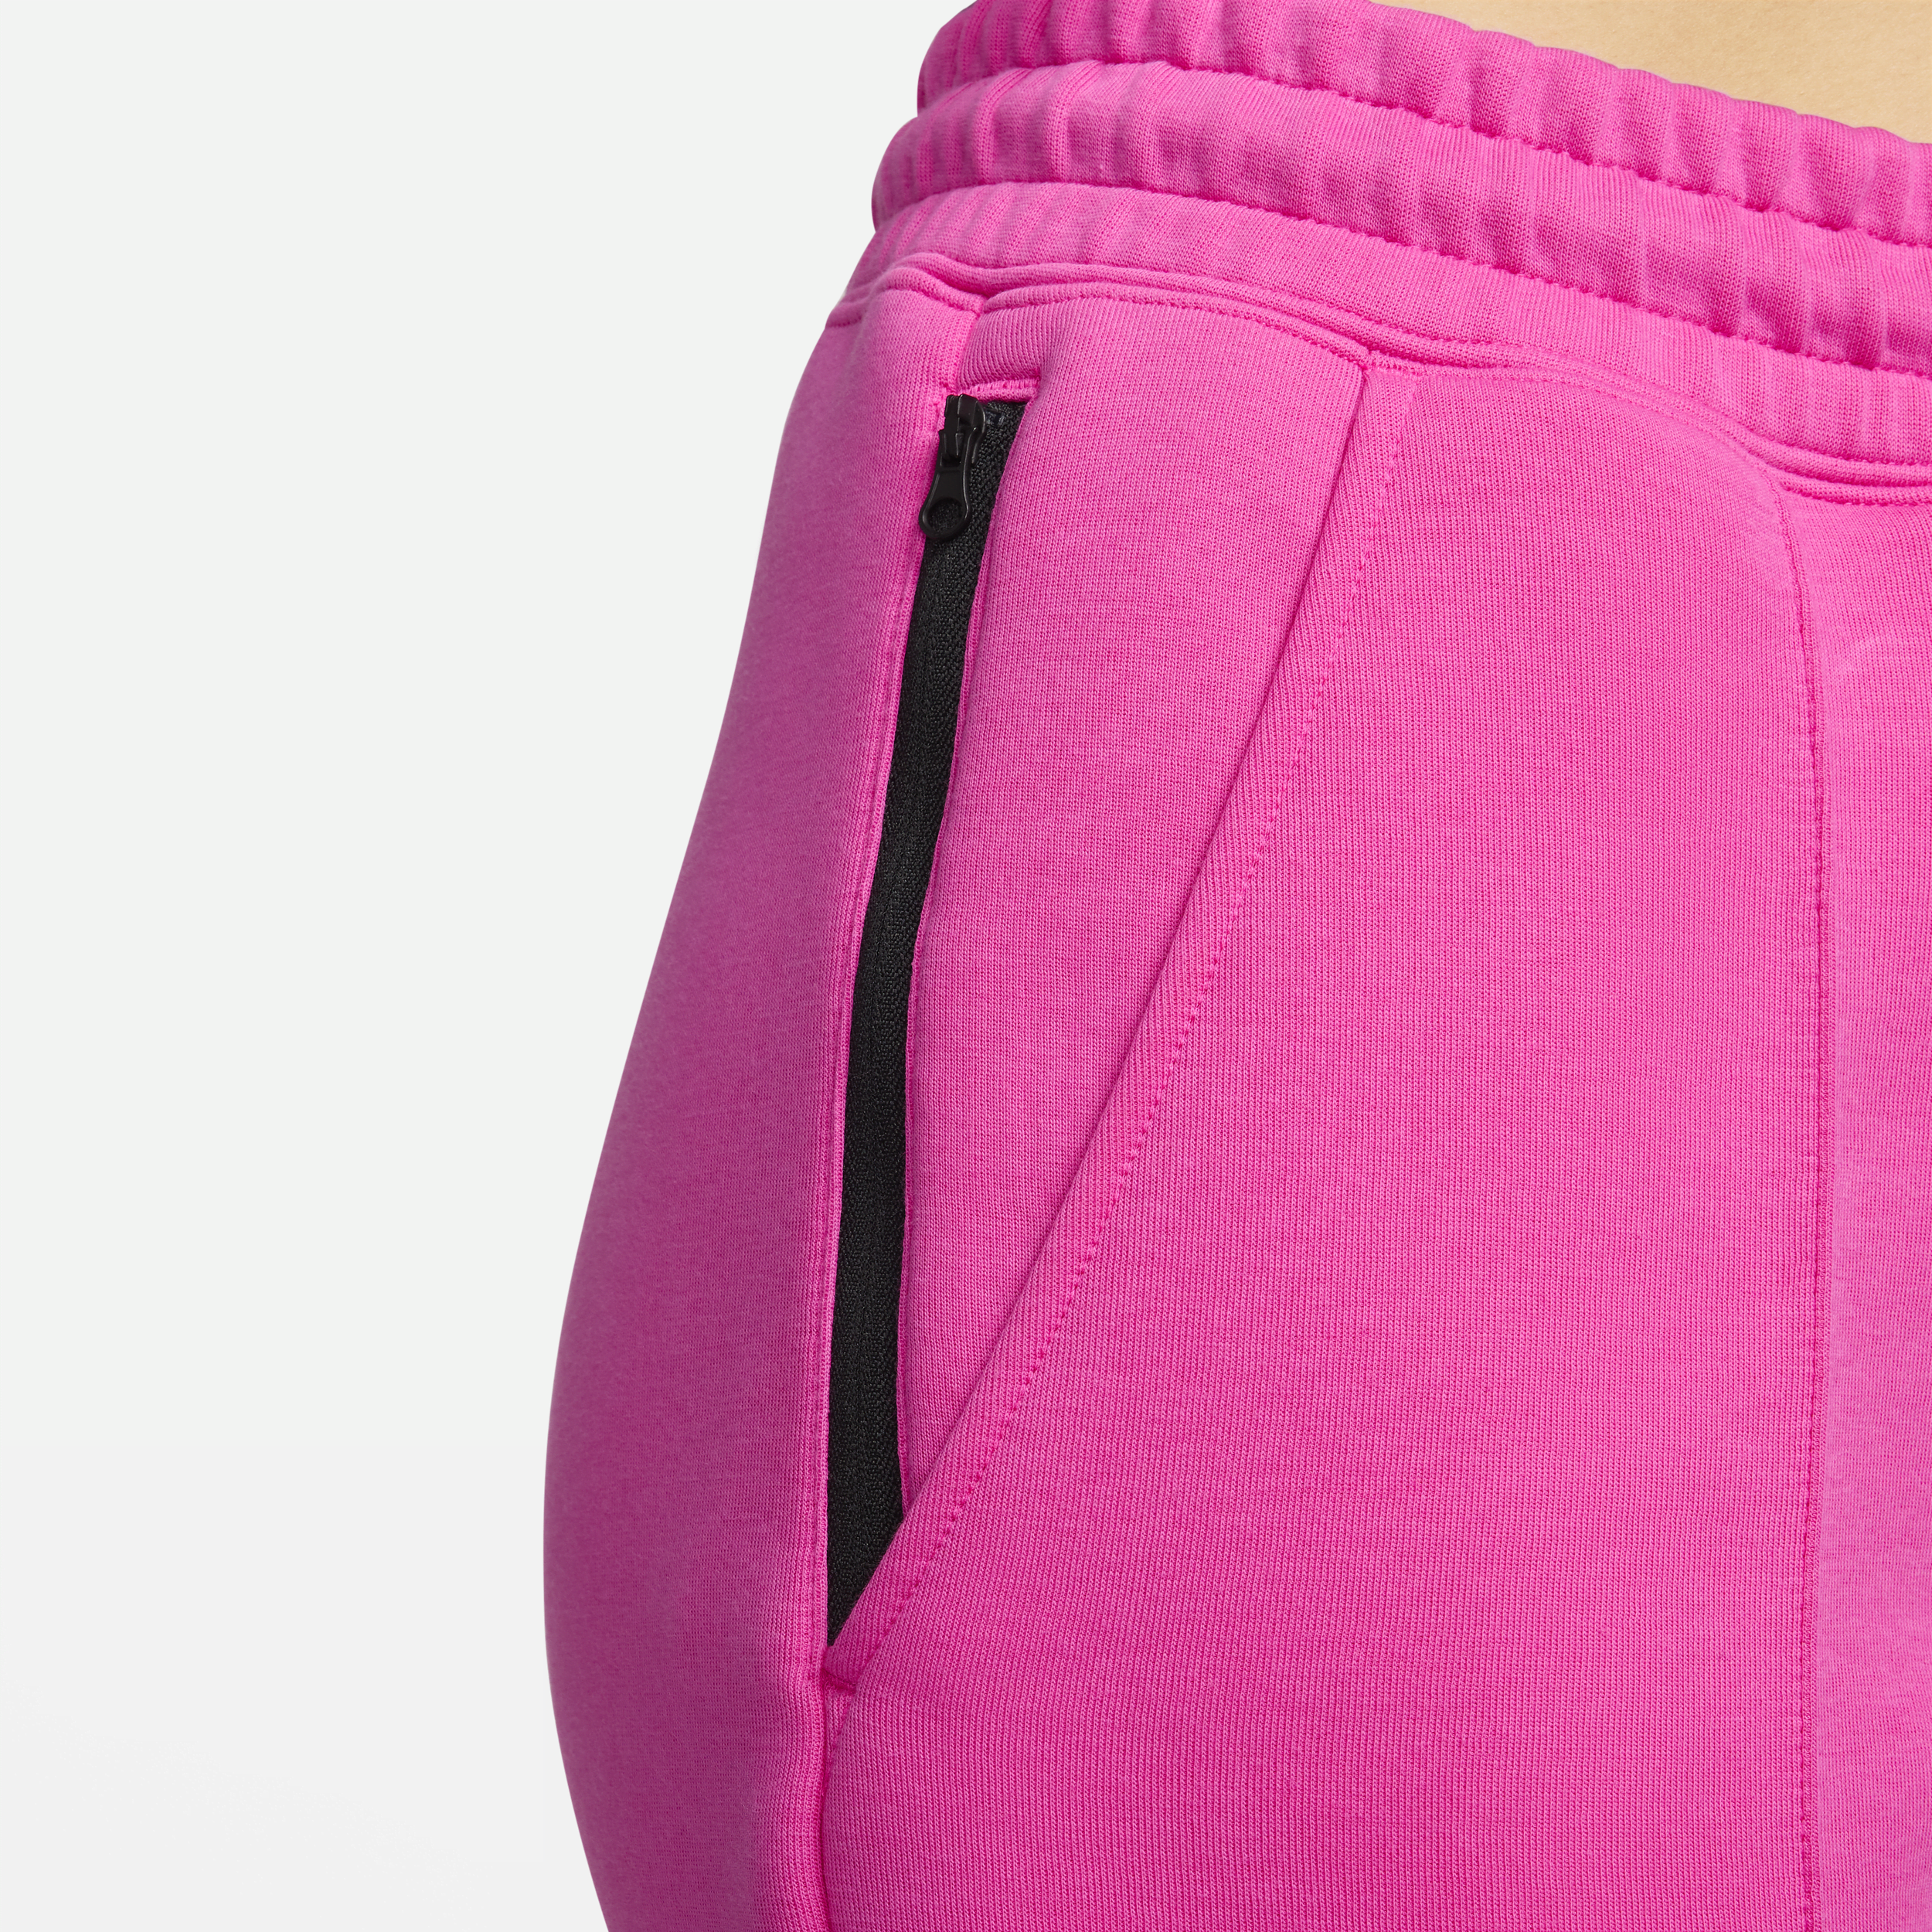 Nike Sportswear Tech Fleece Joggingbroek met halfhoge taille voor dames Rood